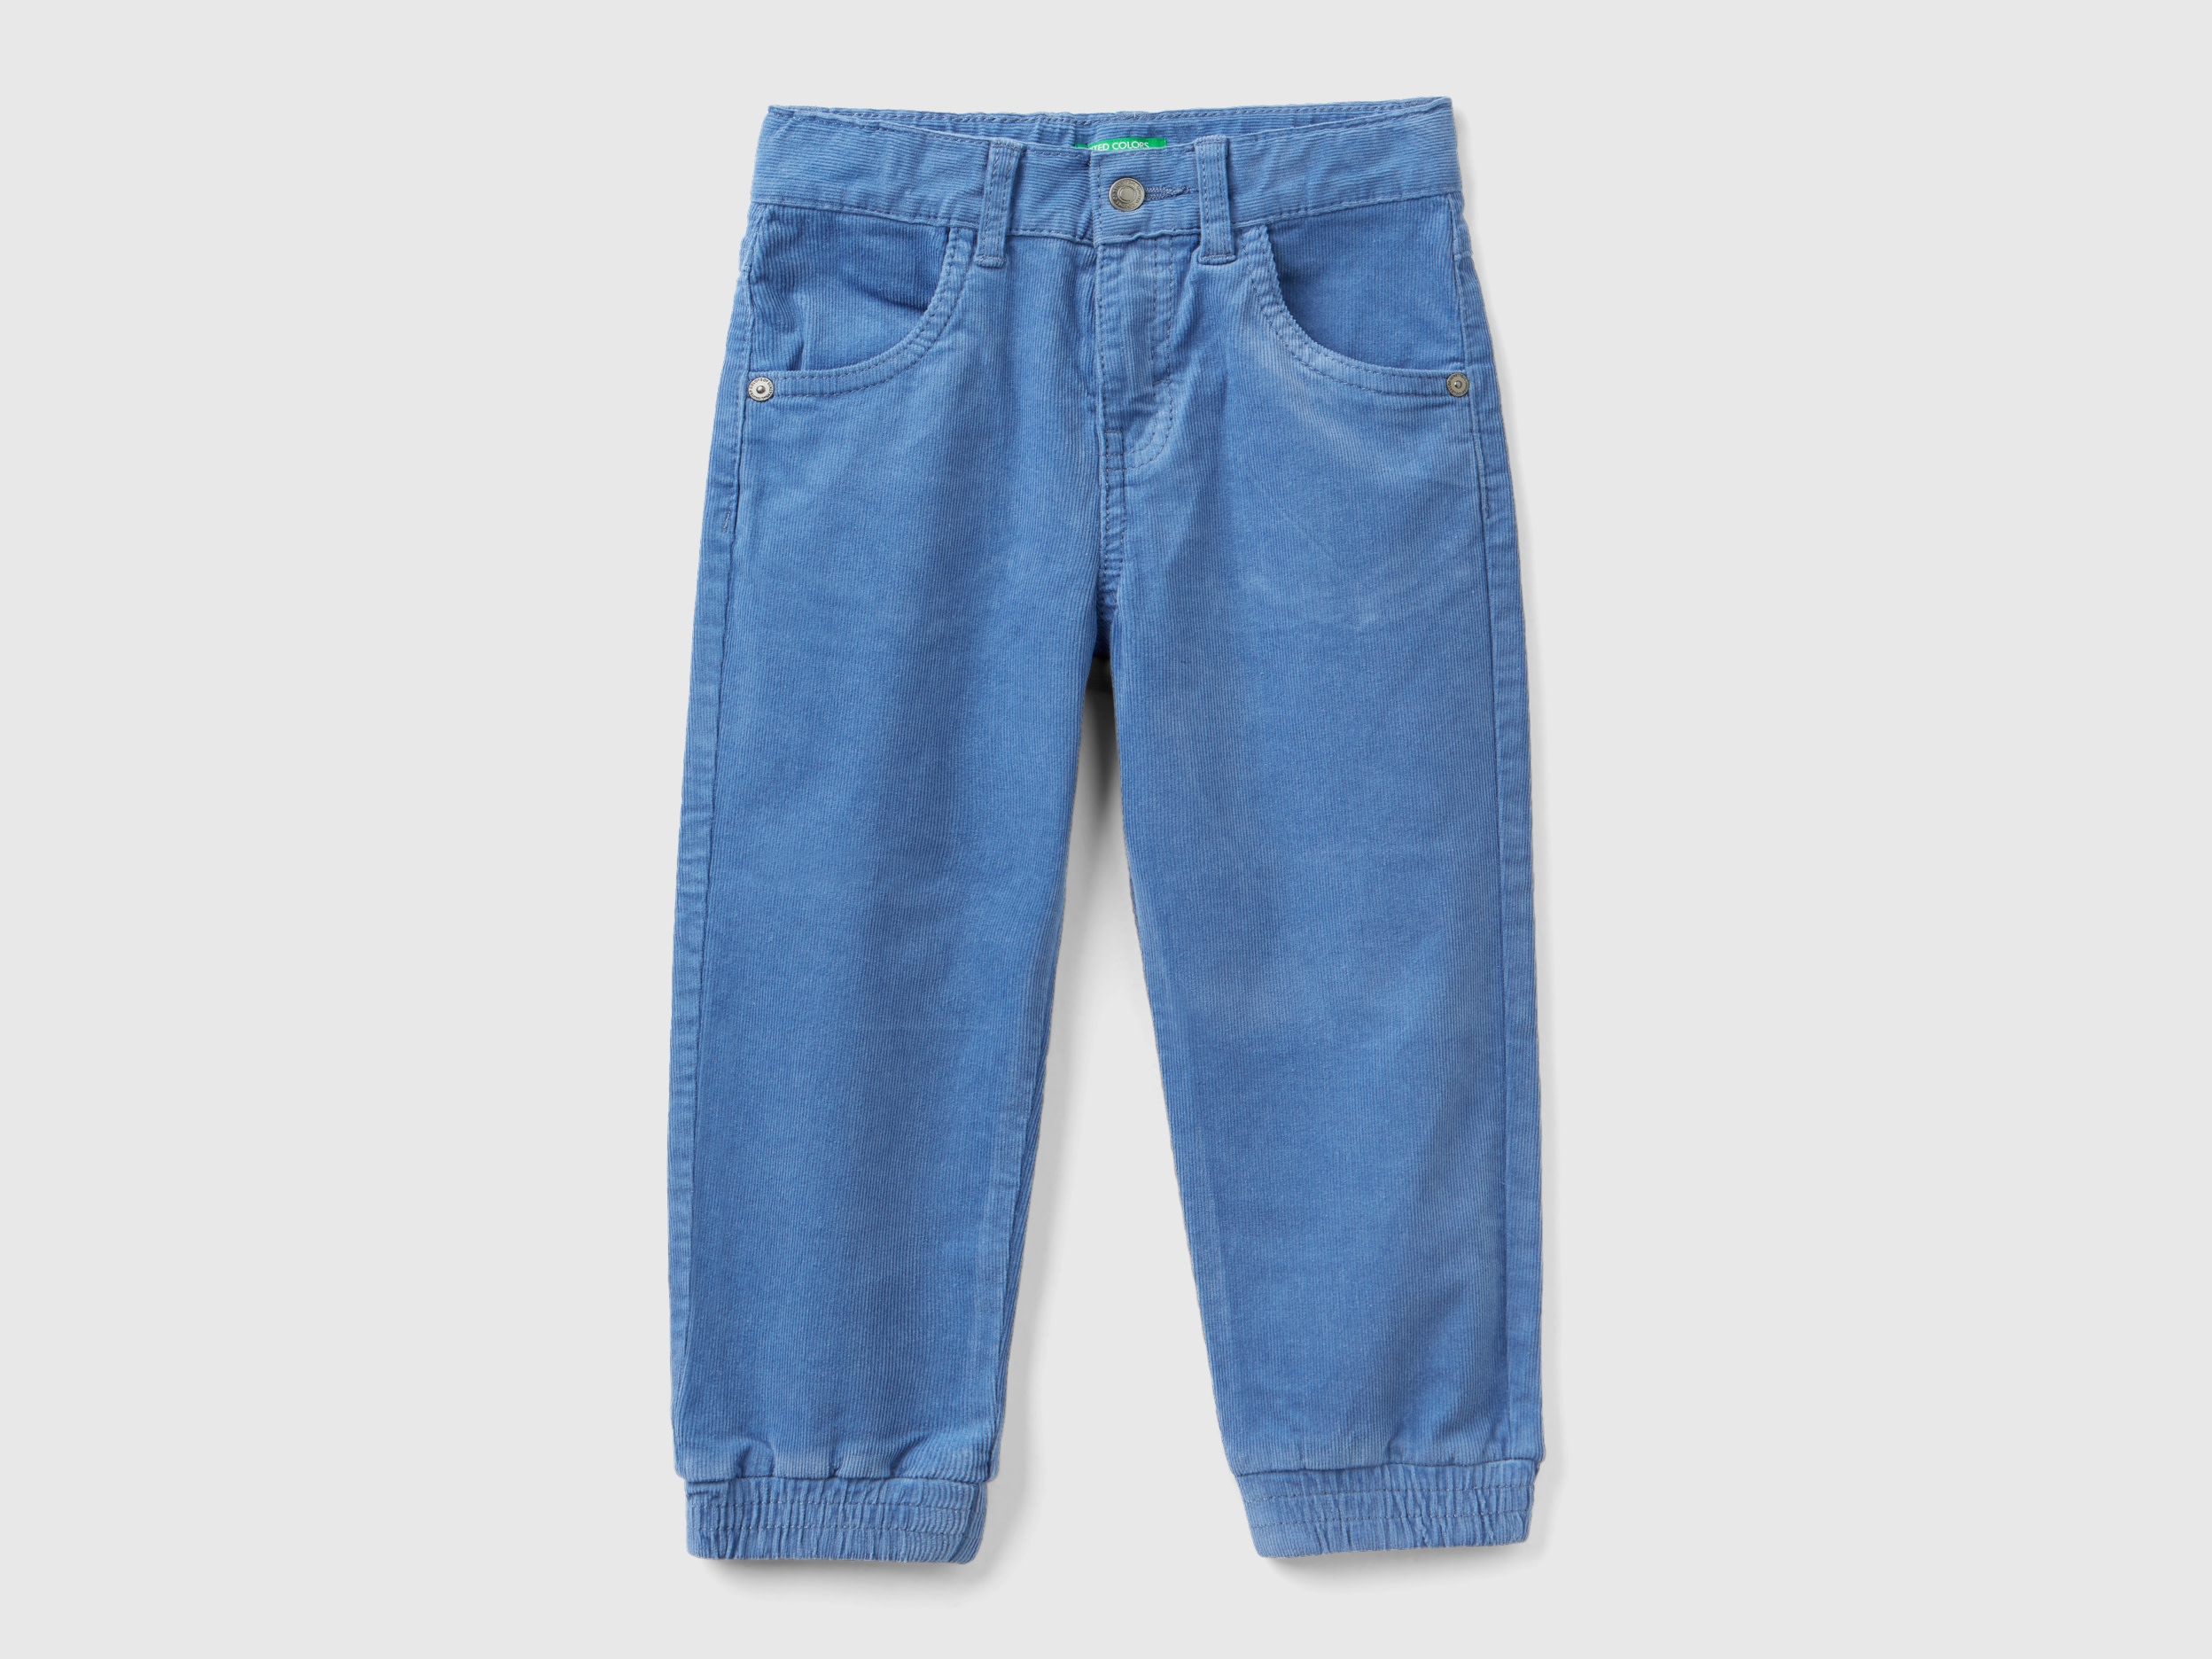 Benetton, Stretch Corduroy Trousers, size 2-3, Light Blue, Kids